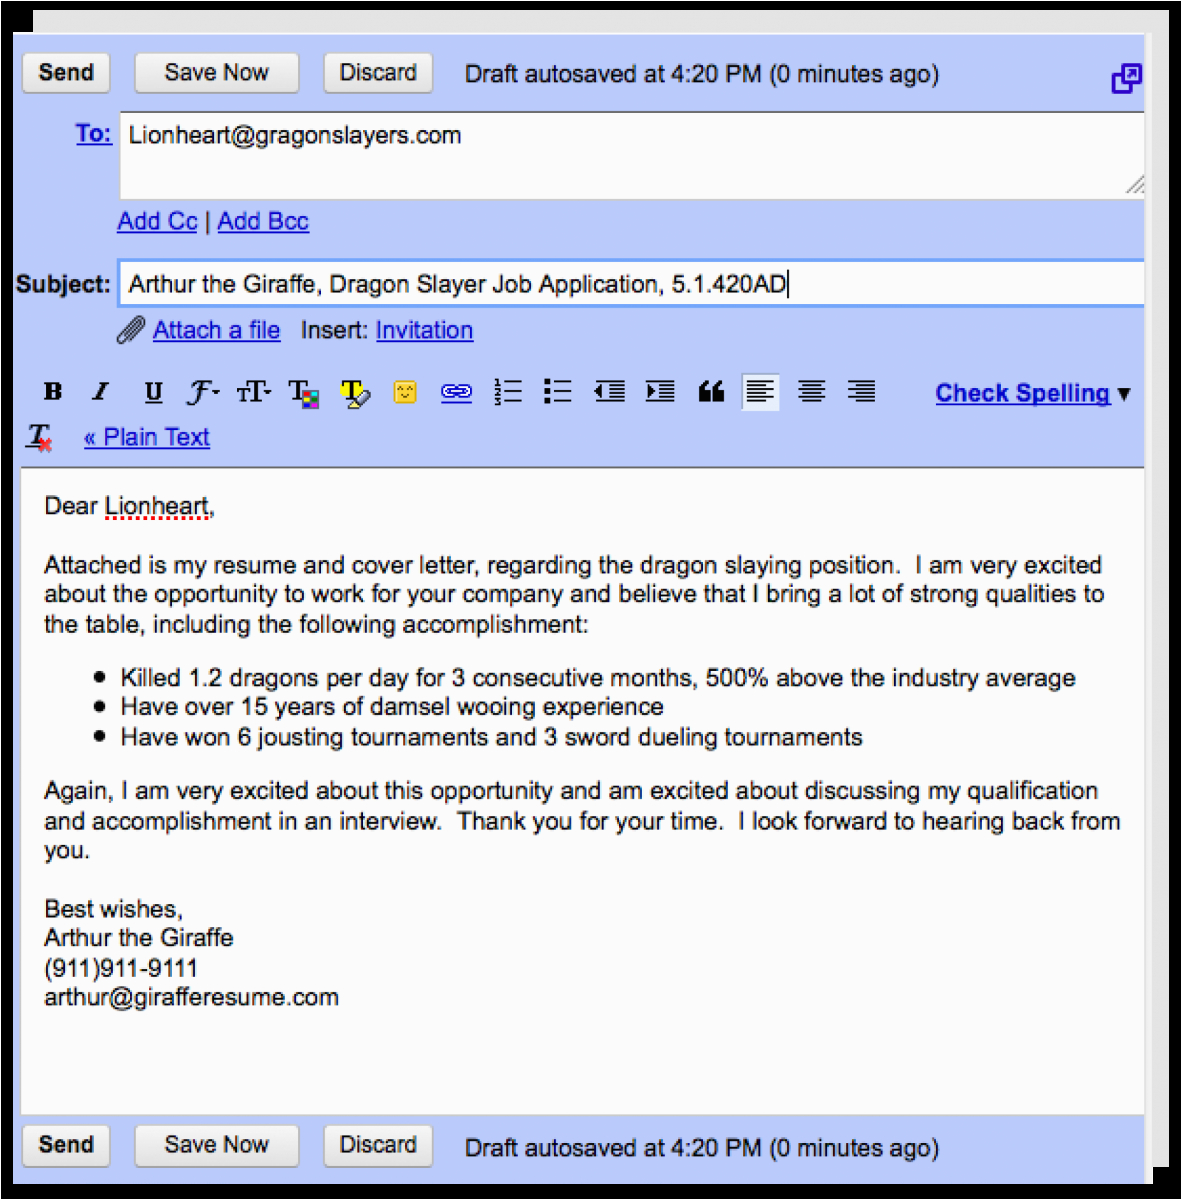 Sample Email Body for Sending Resume Emailing Resume